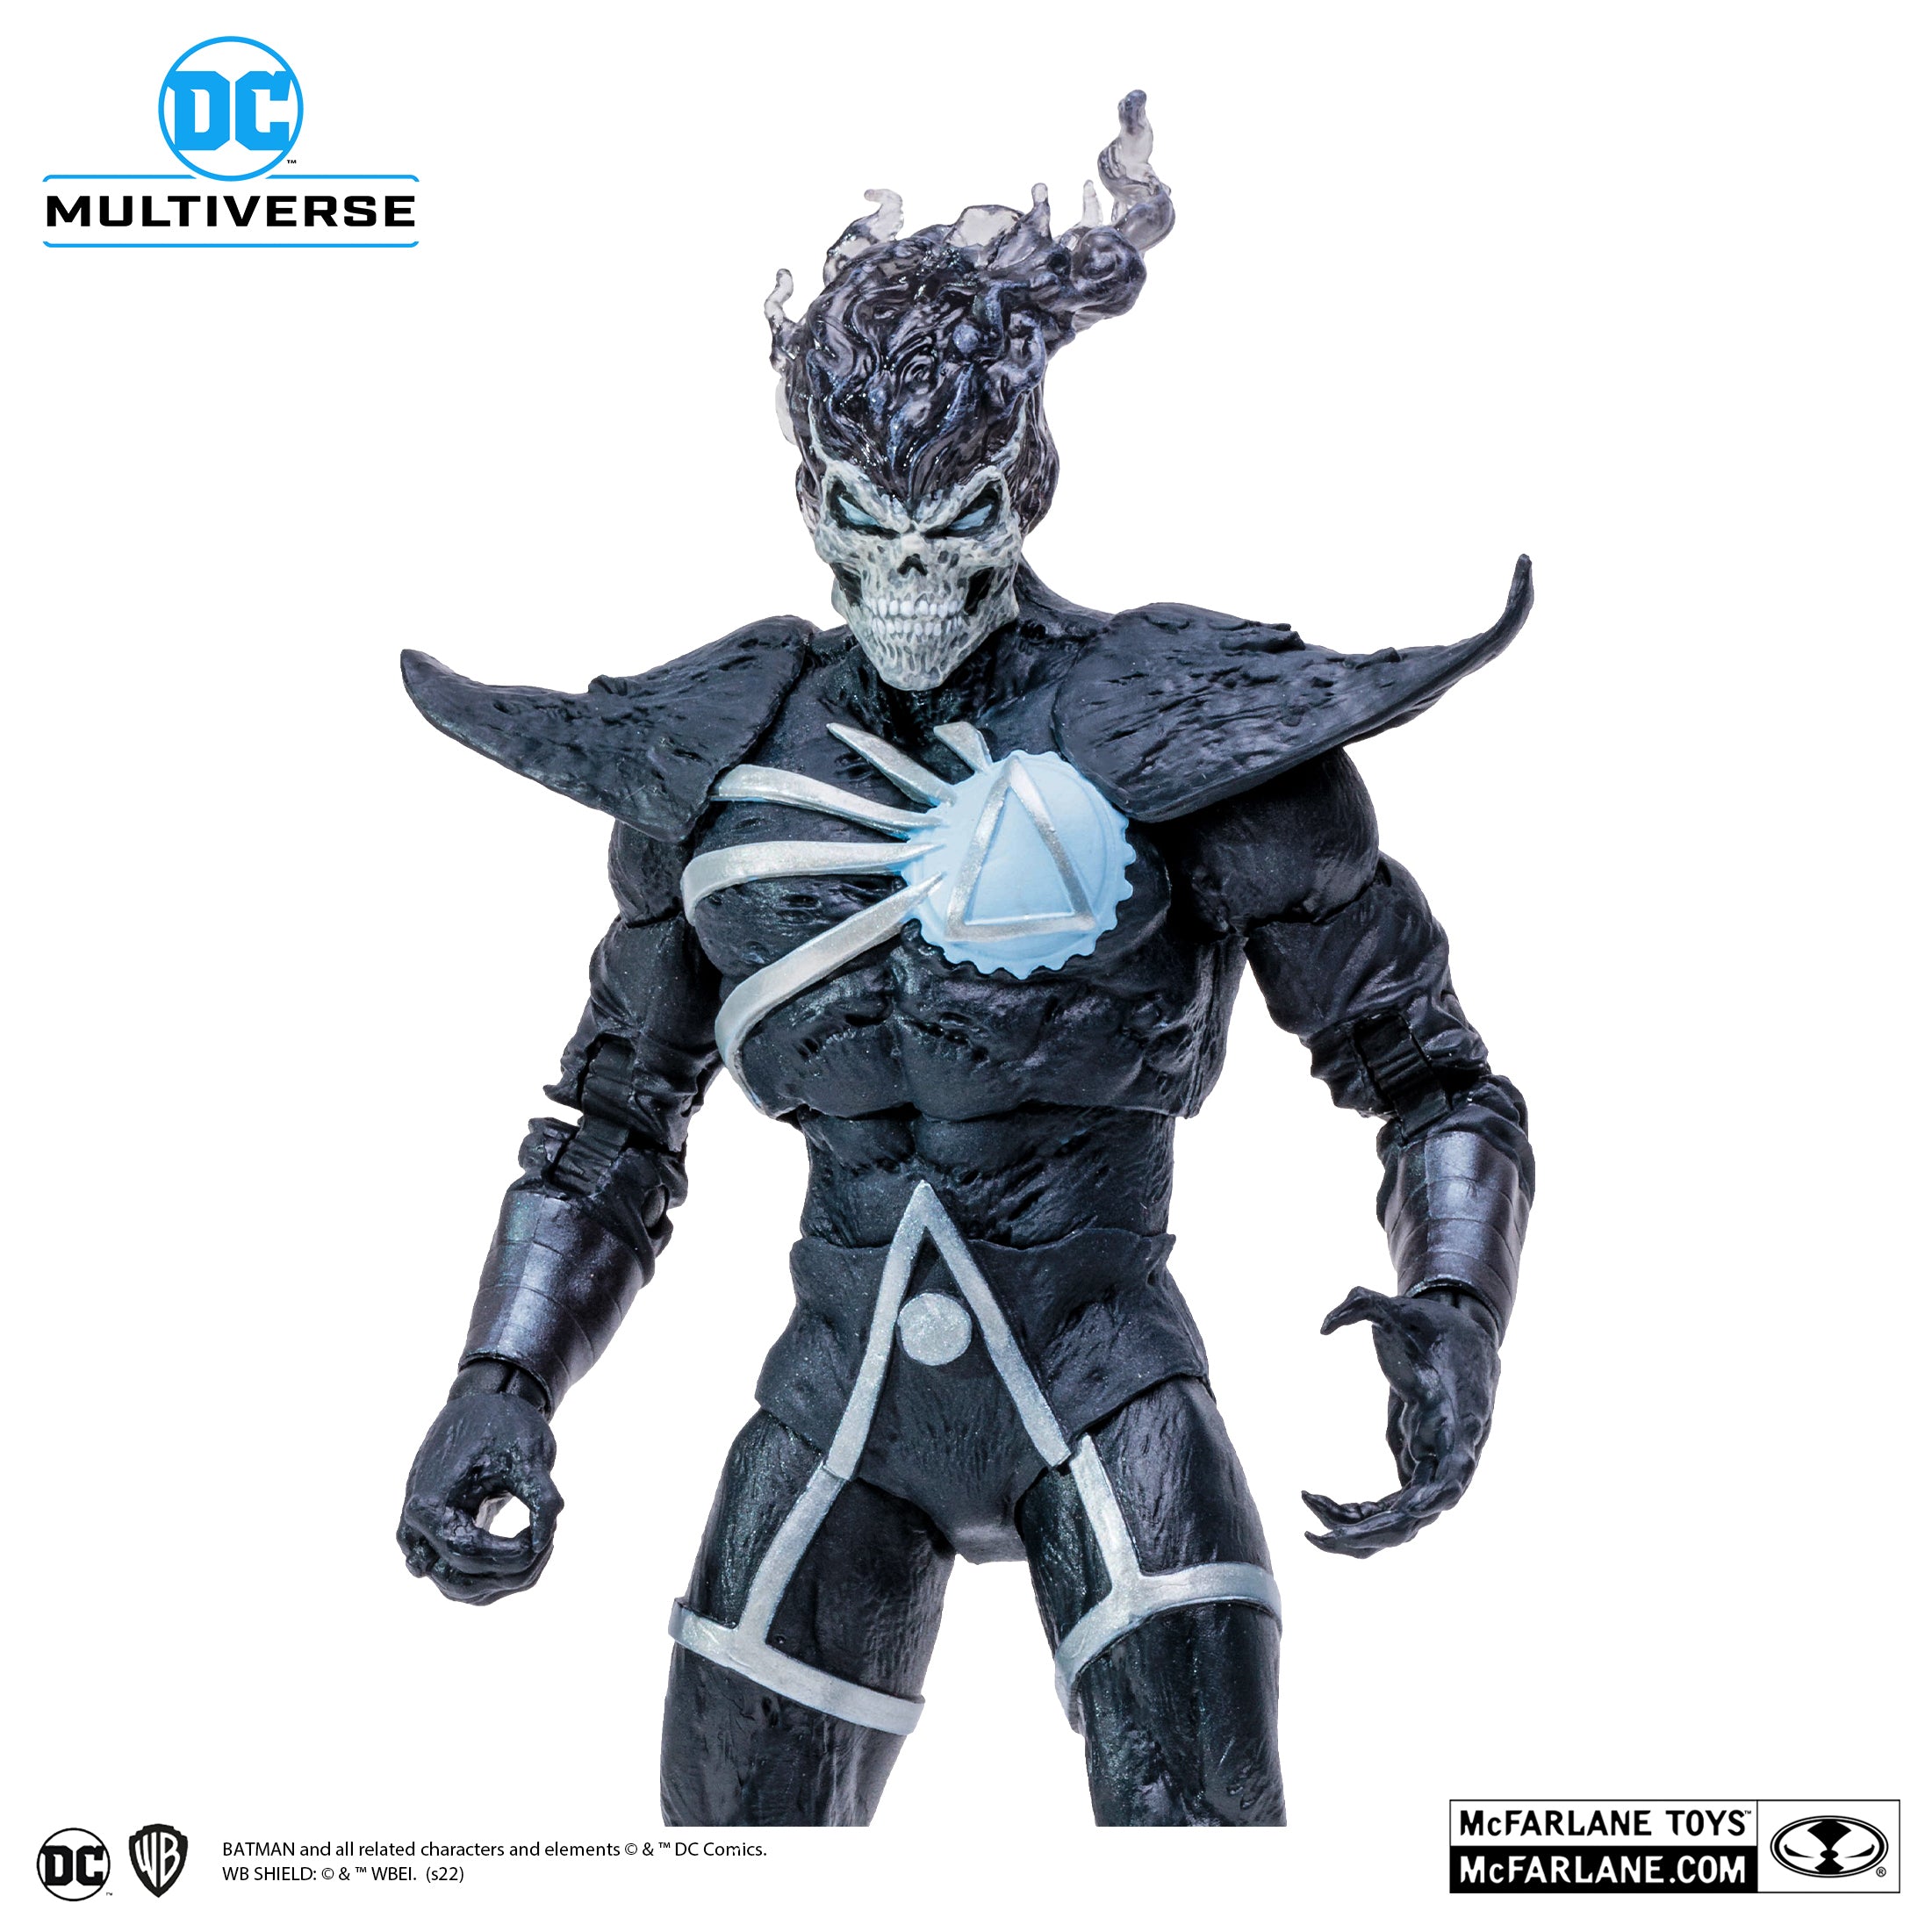 DC Multiverse - McFarlane Toys - Blackest Night - Deathstorm